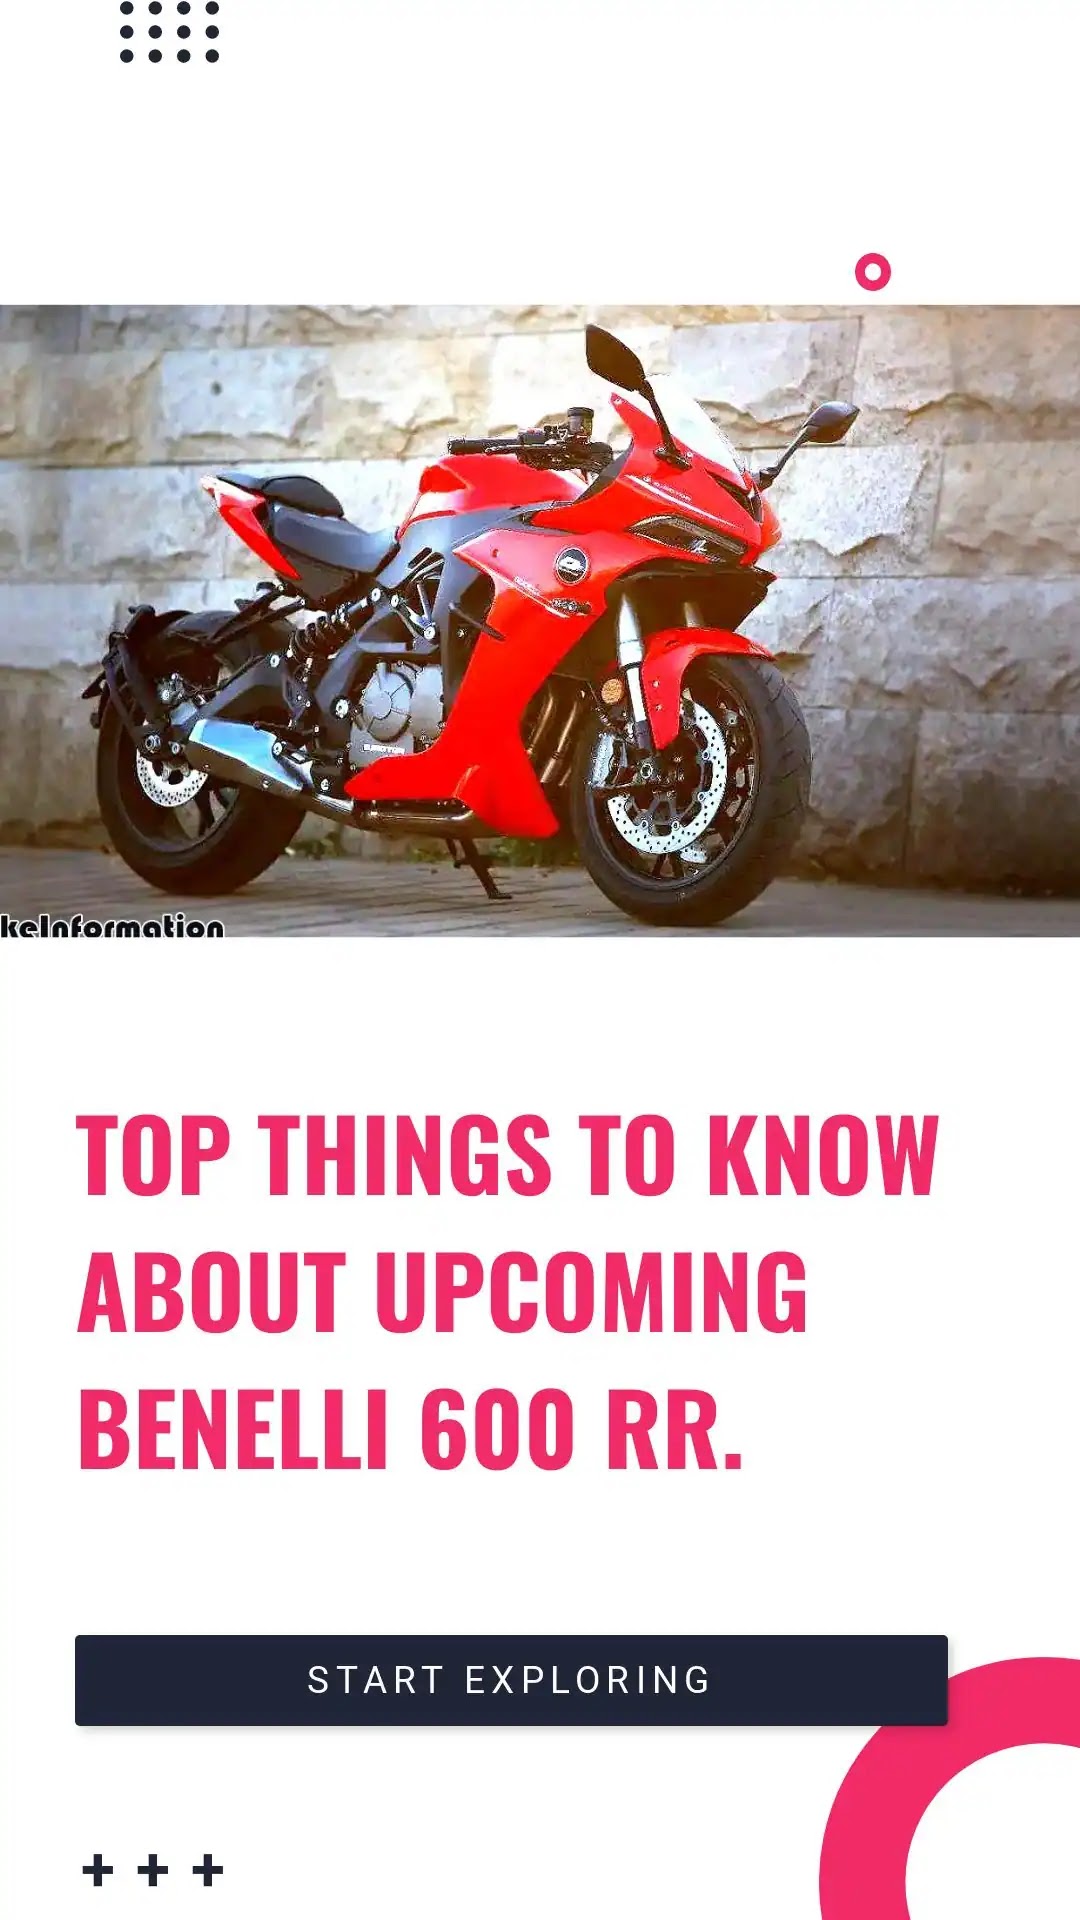 Benelli 600 RR